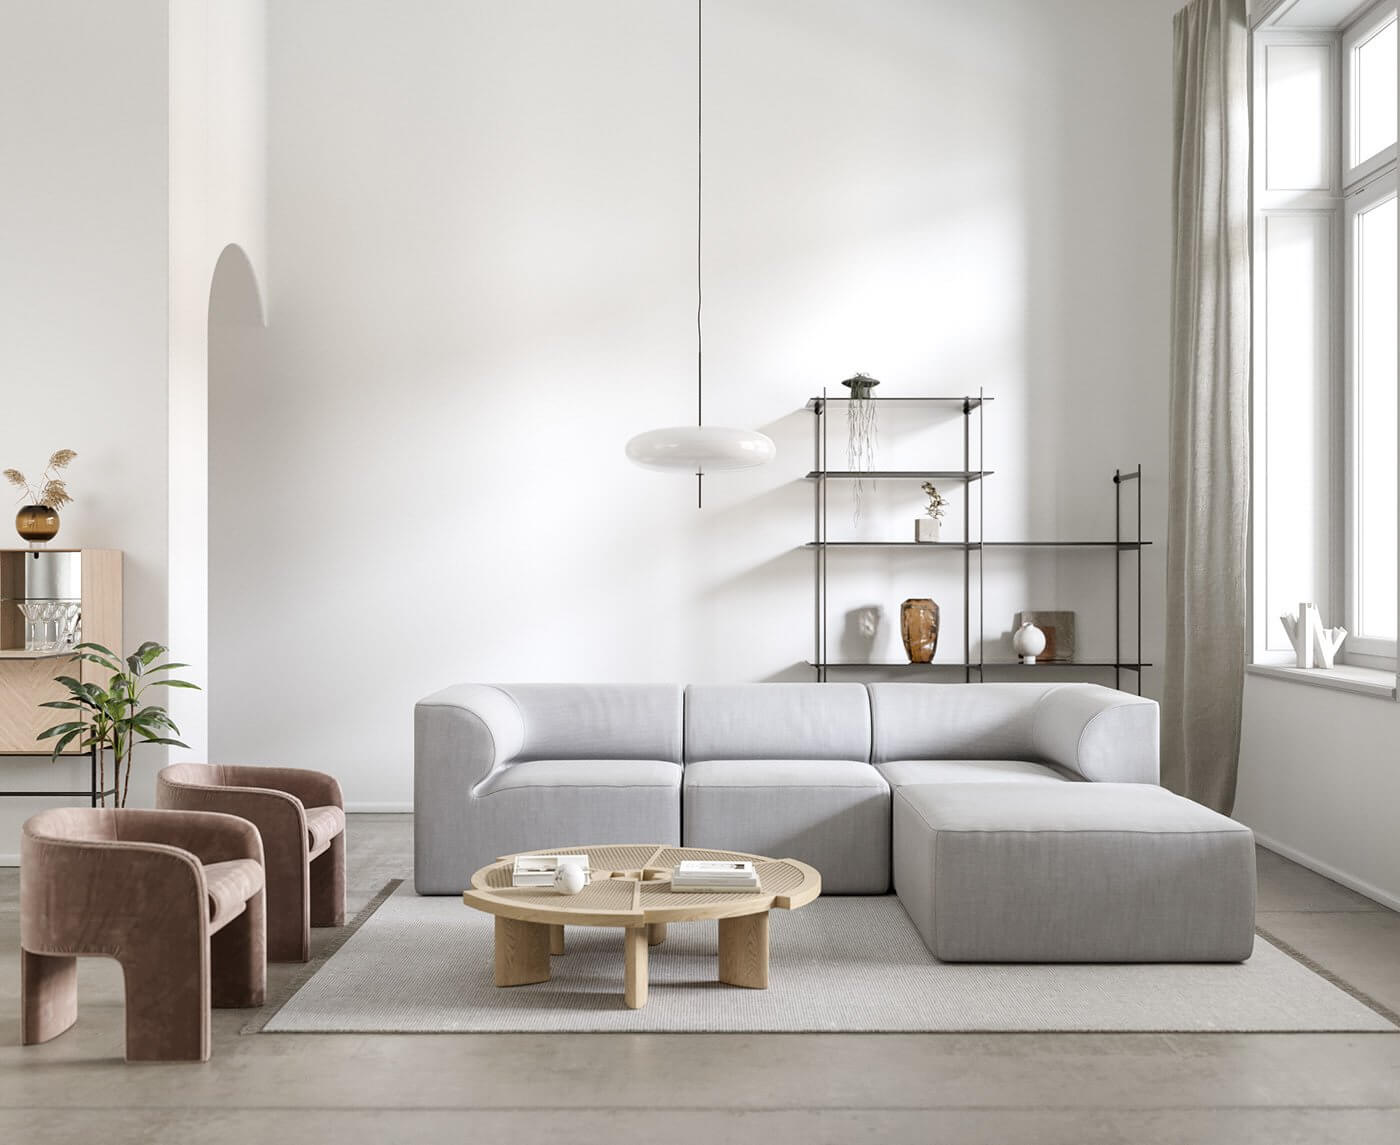 Pale stylish apartment living room design - cgi visualization